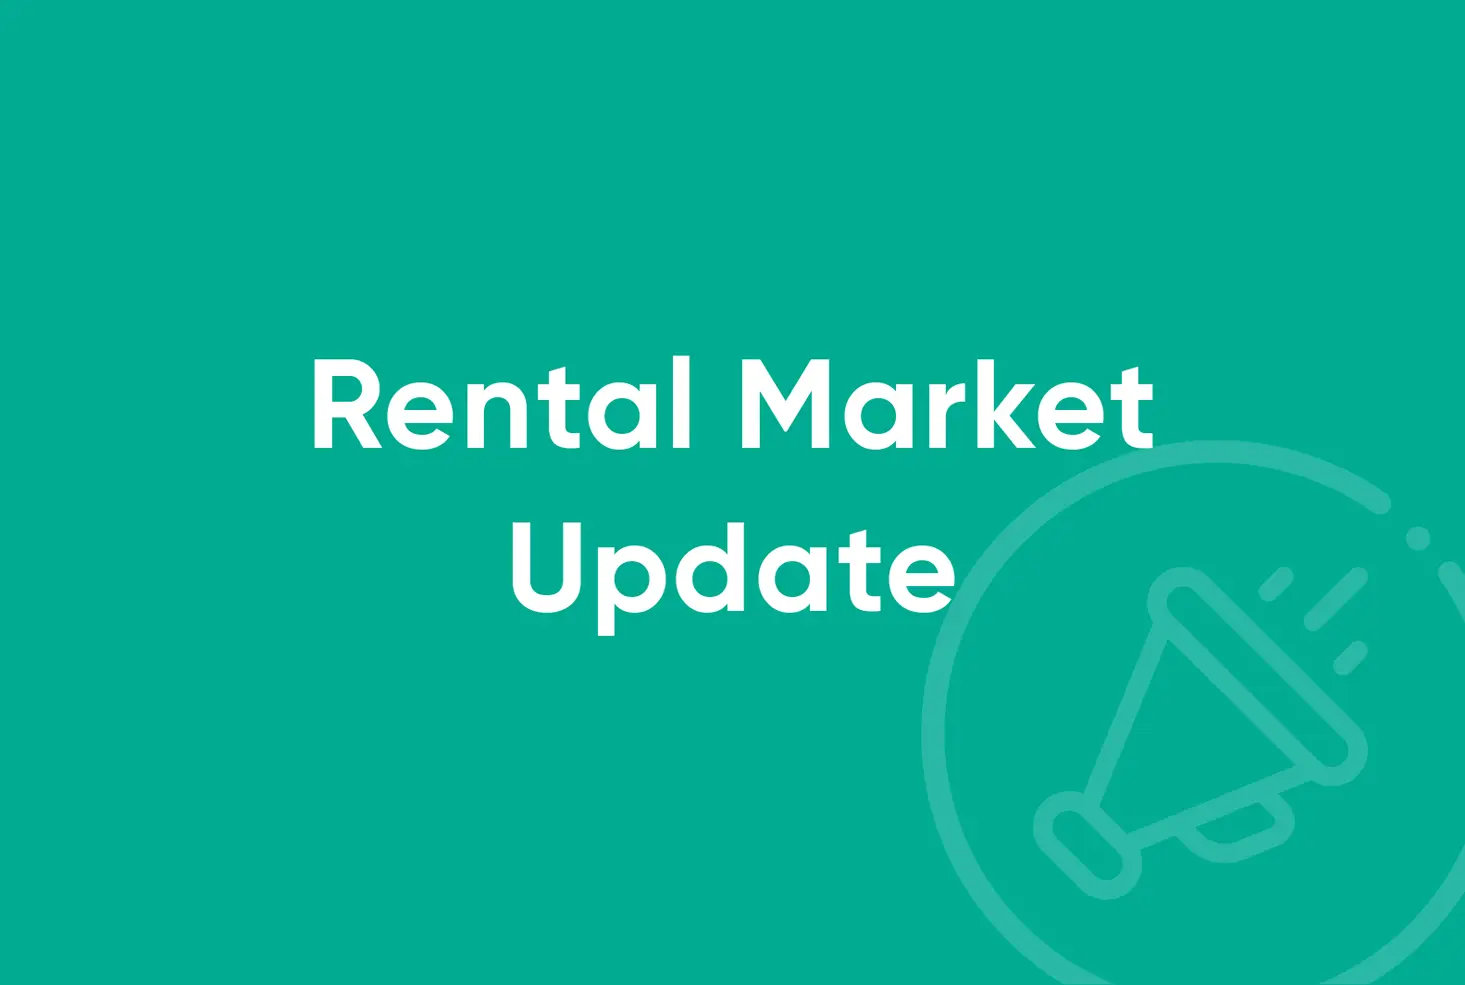 rental market update words on green